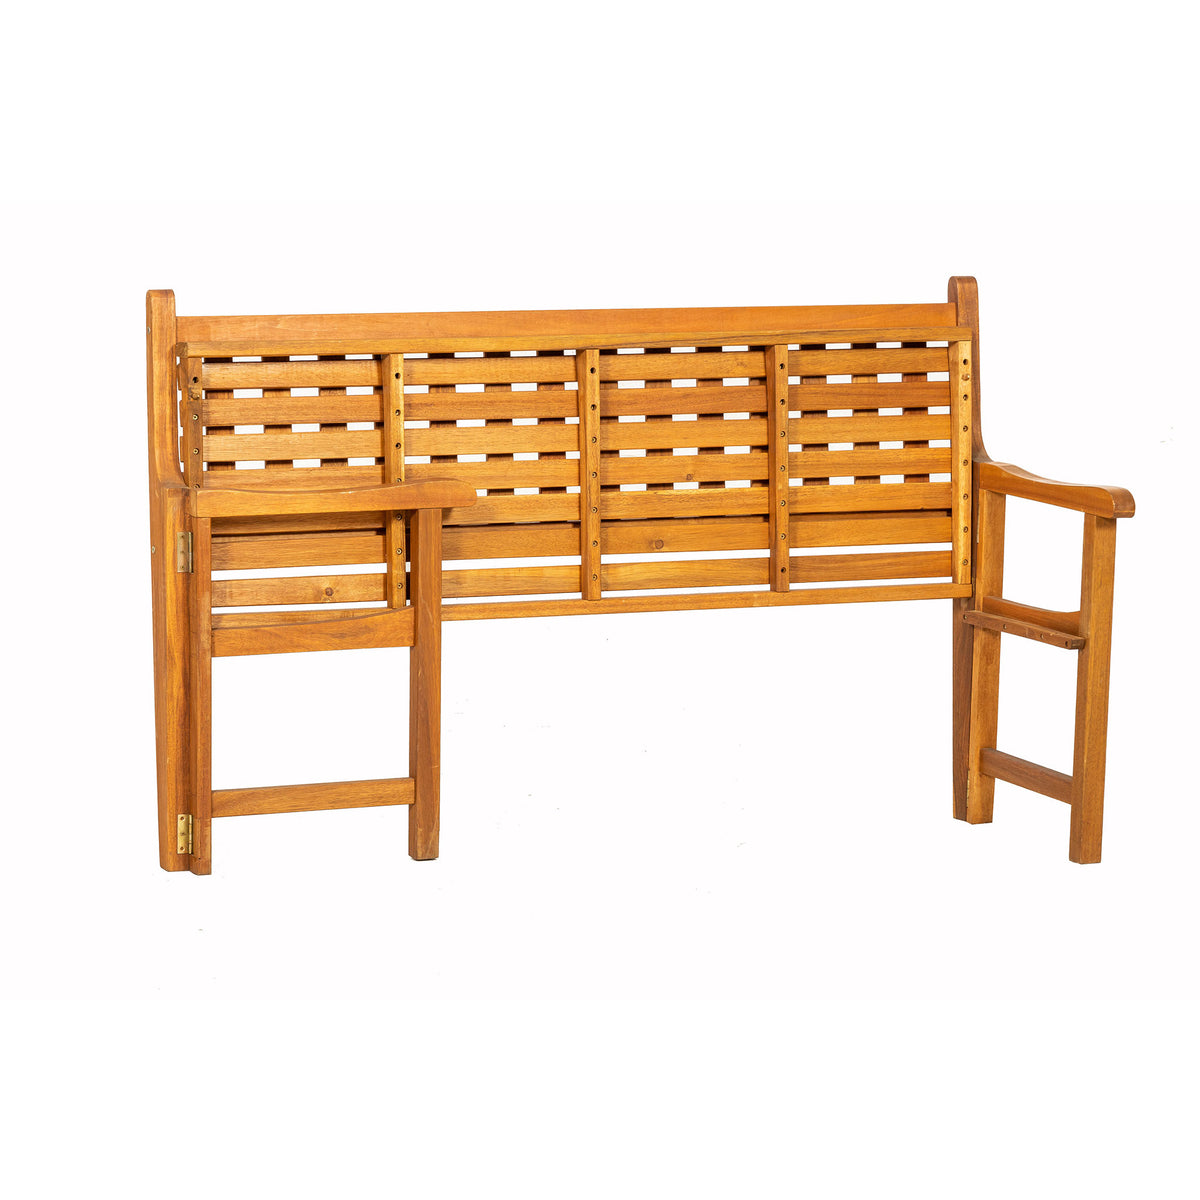 3 Seat Acacia Wooden Folding Bench